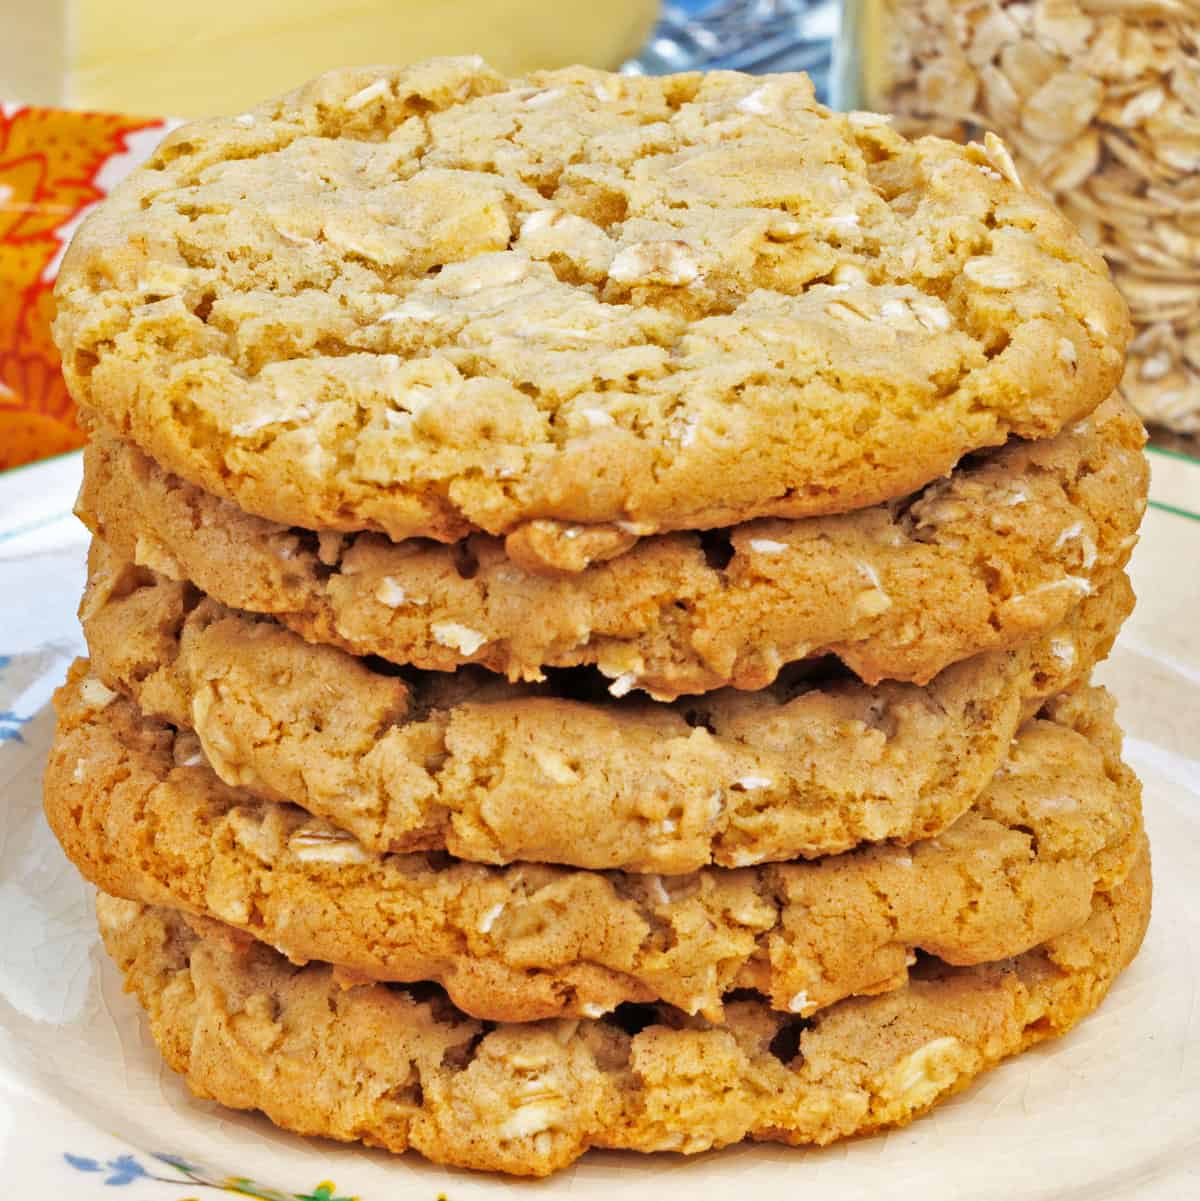 https://onedishkitchen.com/wp-content/uploads/2022/07/oatmeal-cookies-one-dish-kitchen-square-enhanced.jpg